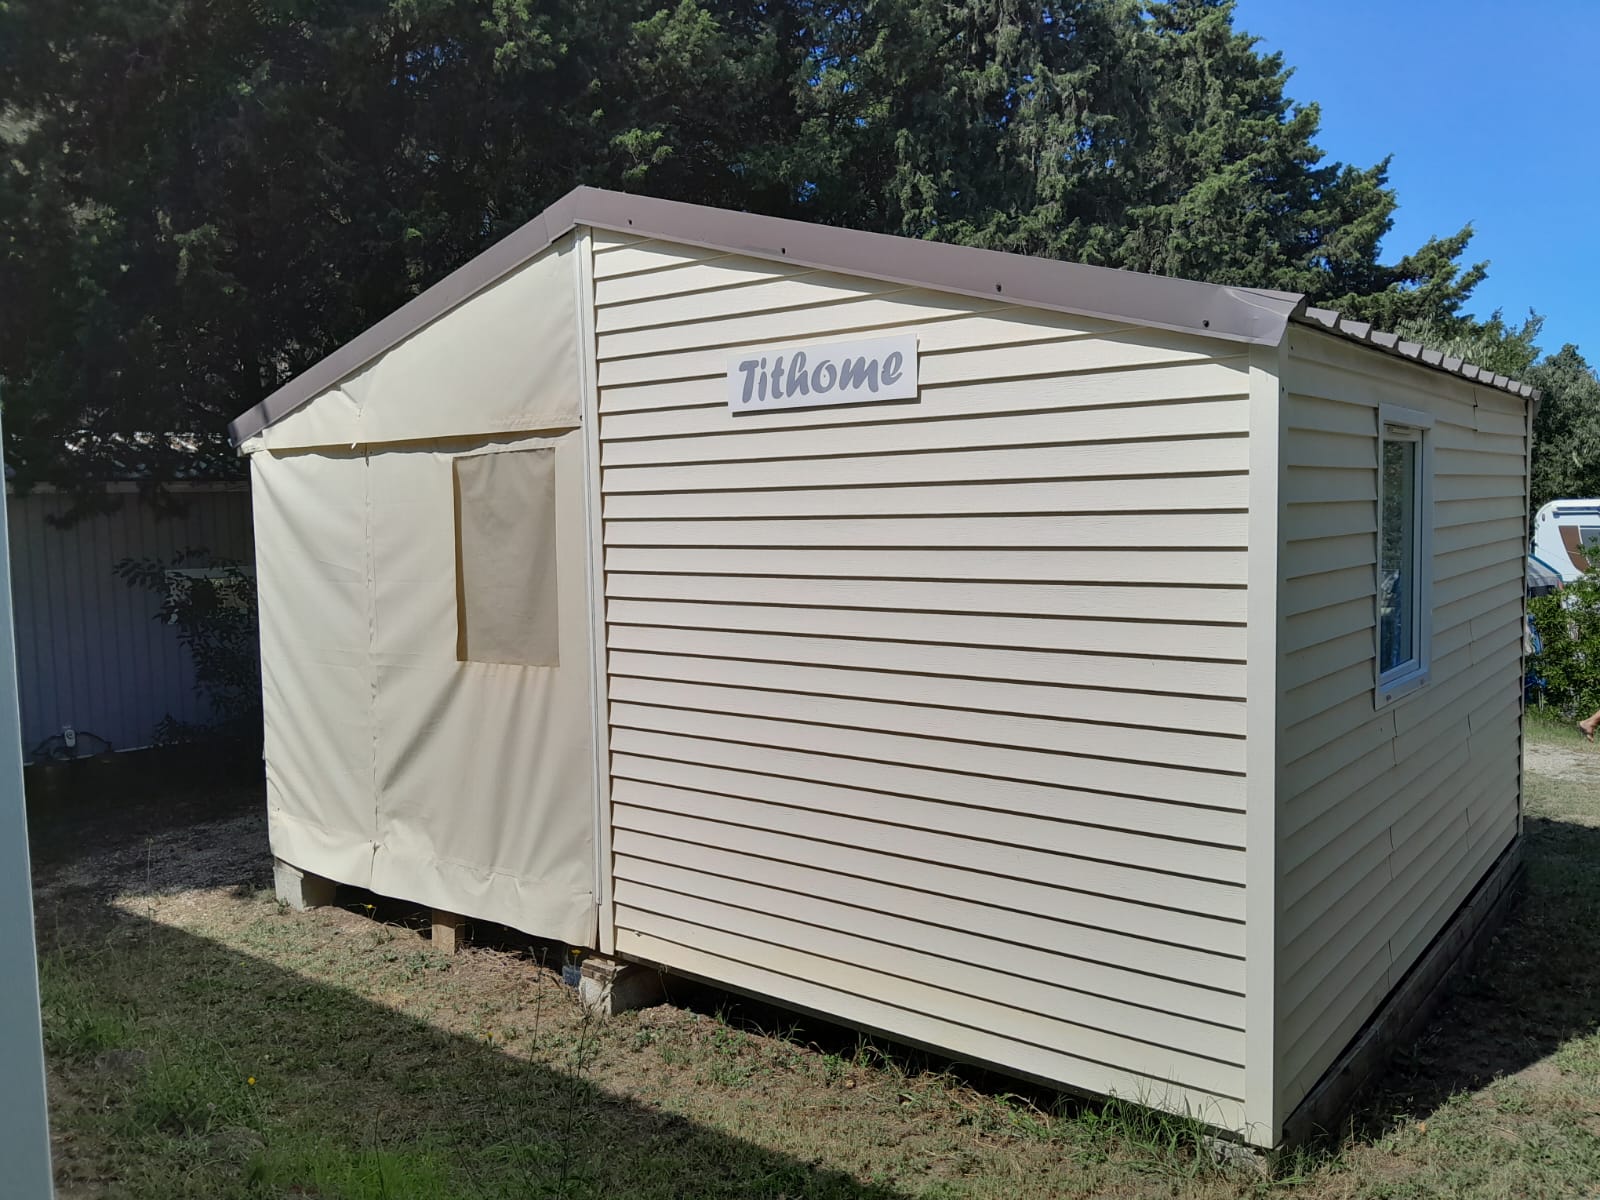 Location - Lodge Tithome (Sans Sanitaires) - Camping Fontisson